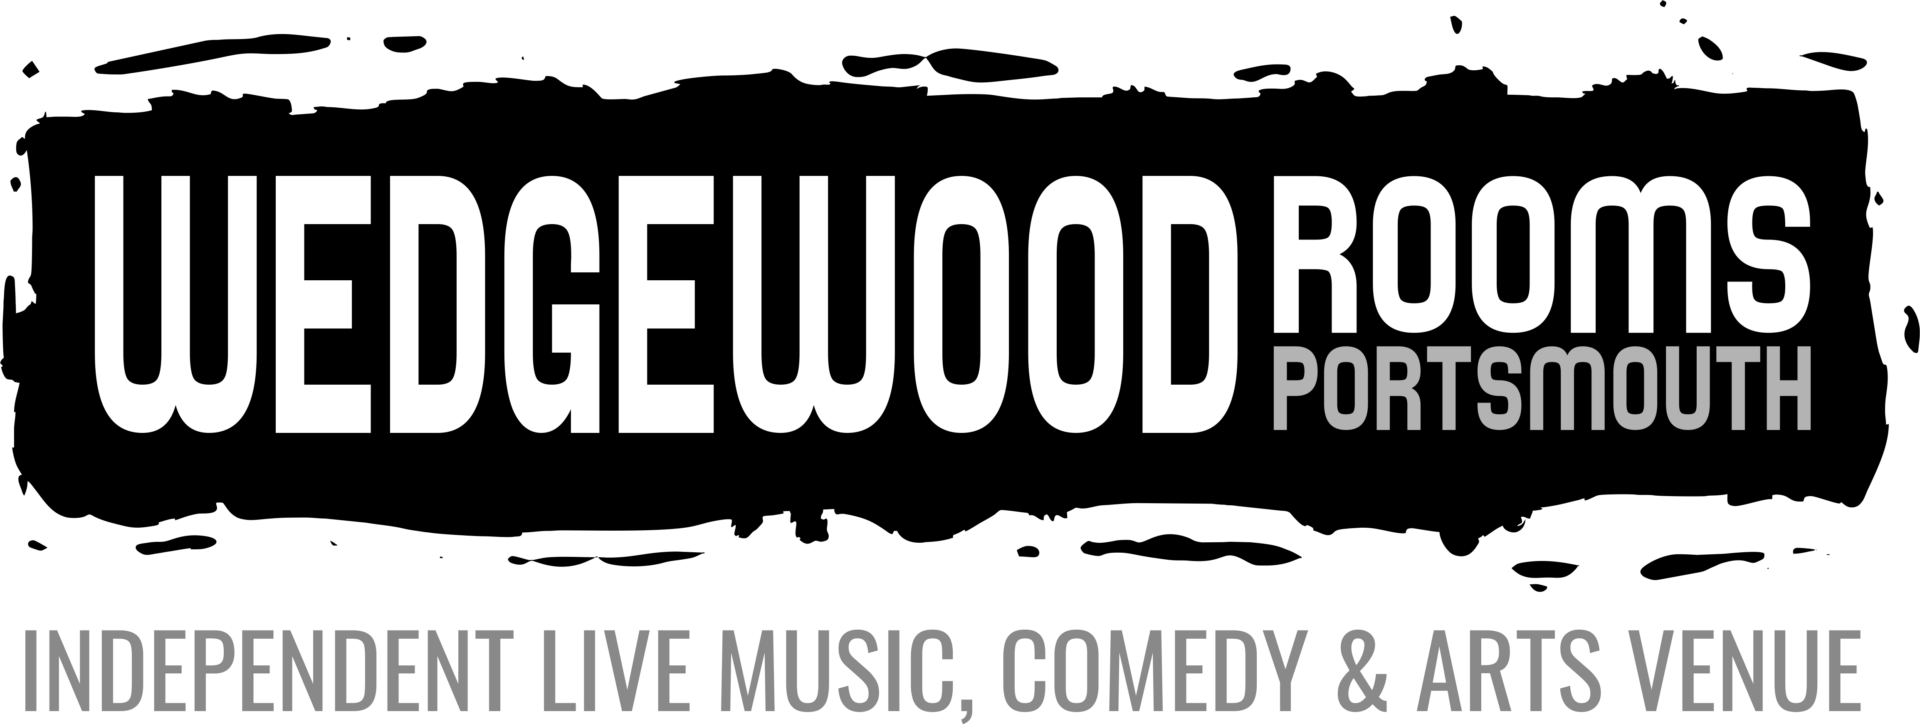 wedgewood rooms logo